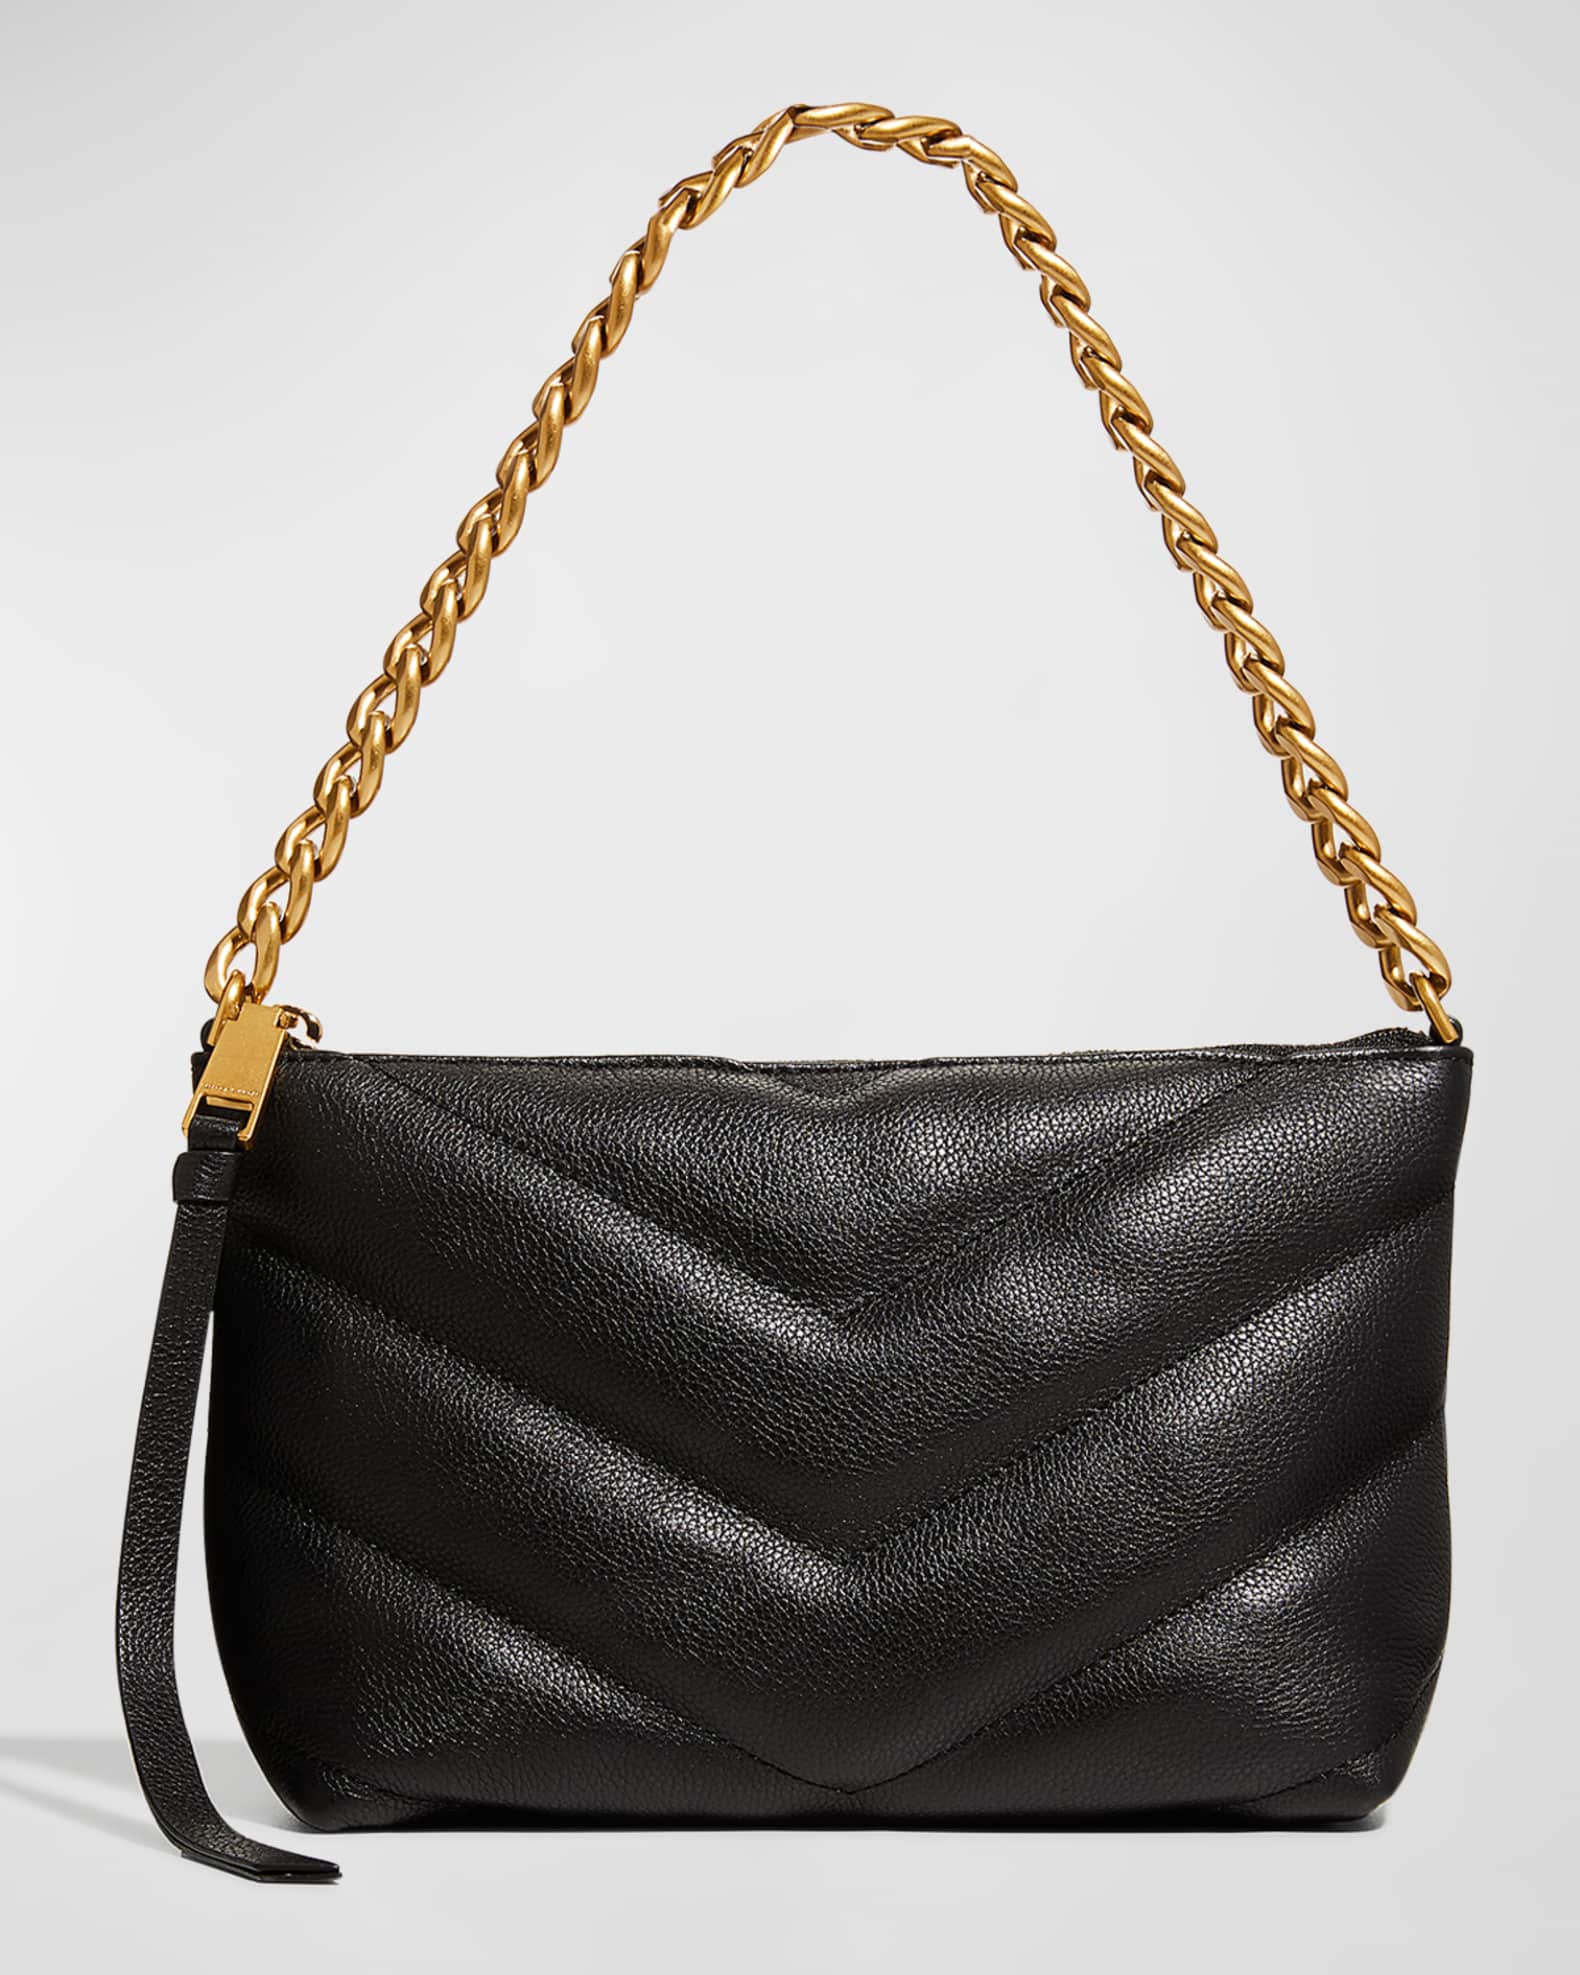 Rebecca Minkoff Mini Crossbody Black Leather Adjustable Shoulder Bag.